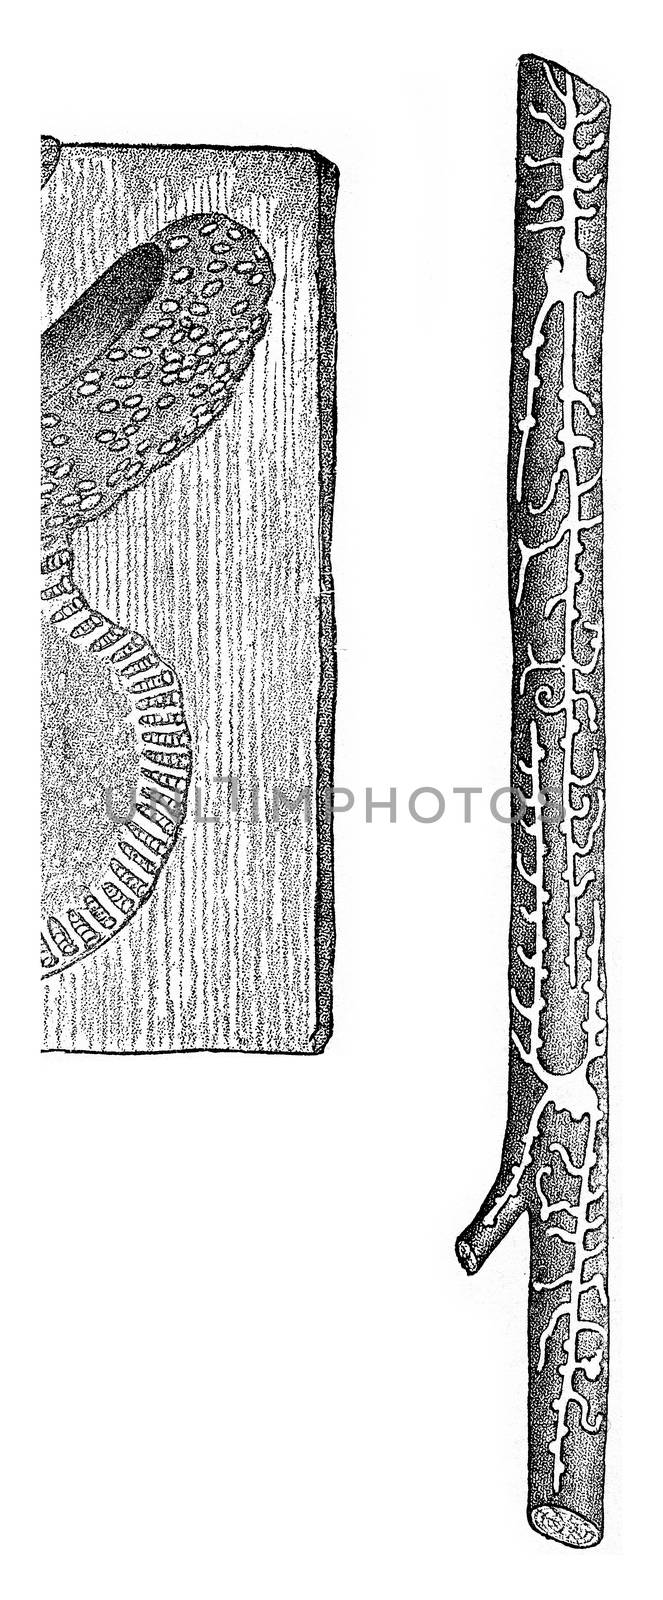 Galleries of Hylesinus minimus on Pin, vintage engraved illustration.
